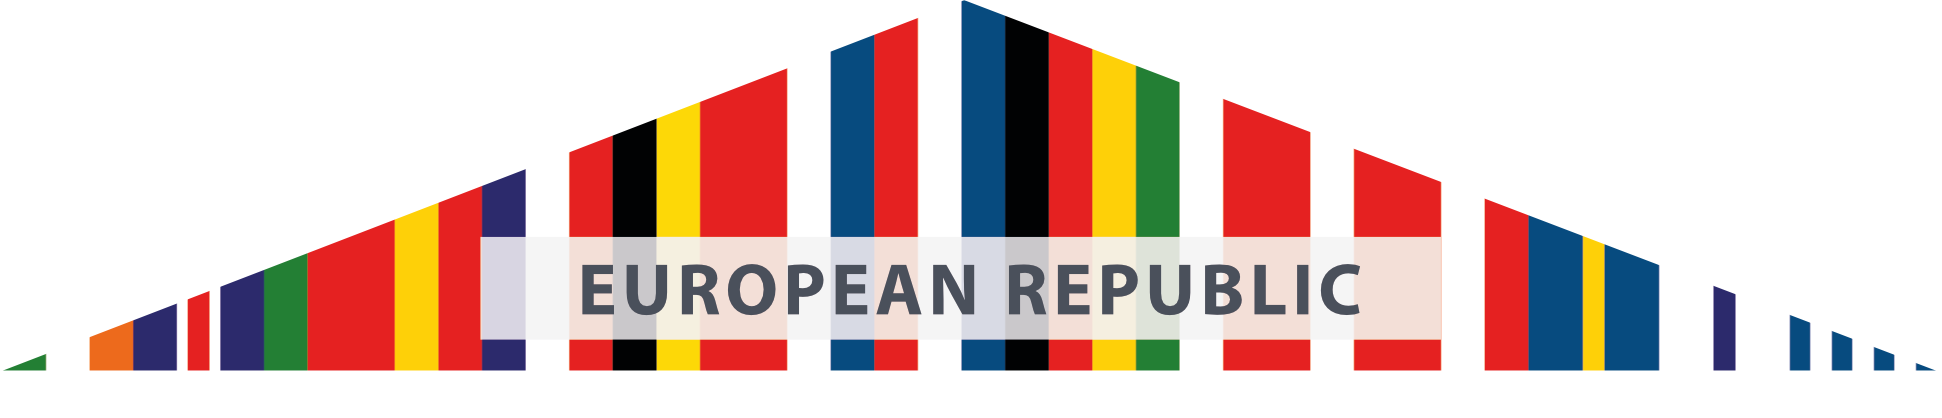 Republikanism i Europa – en kort historik